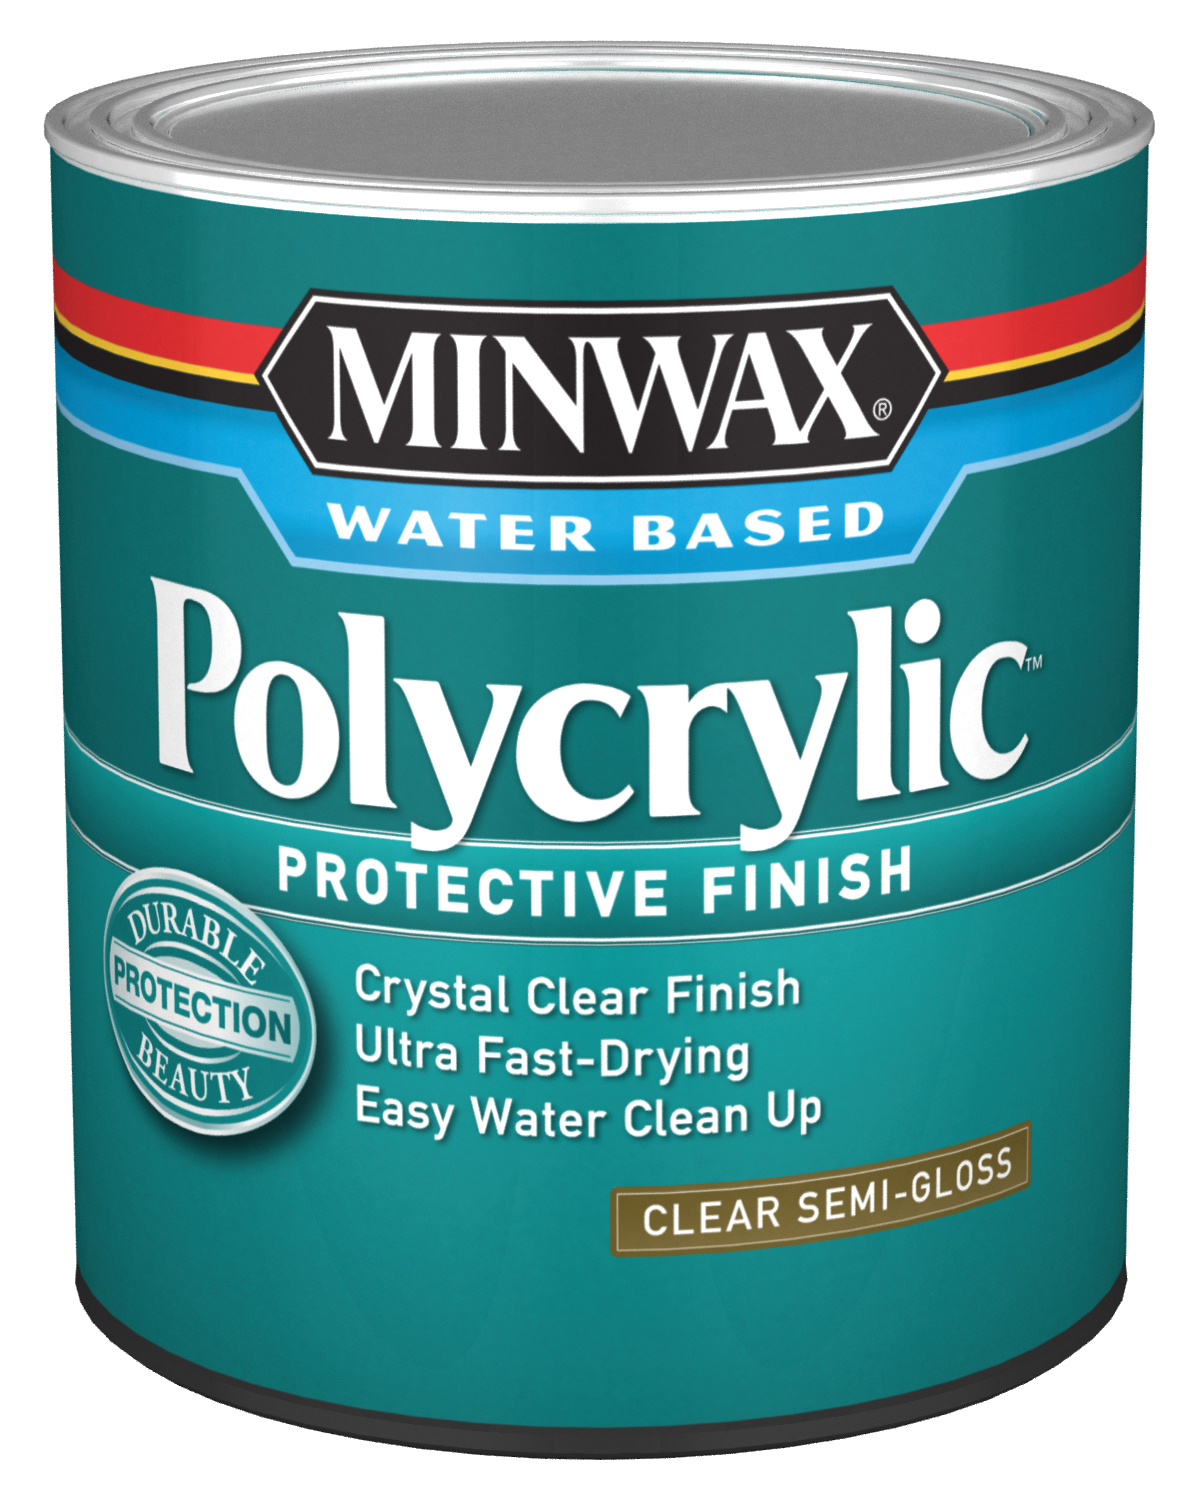 Minwax Polycrylic Protective Finish Clear Semi-Gloss 1-Qt - image 1 of 5